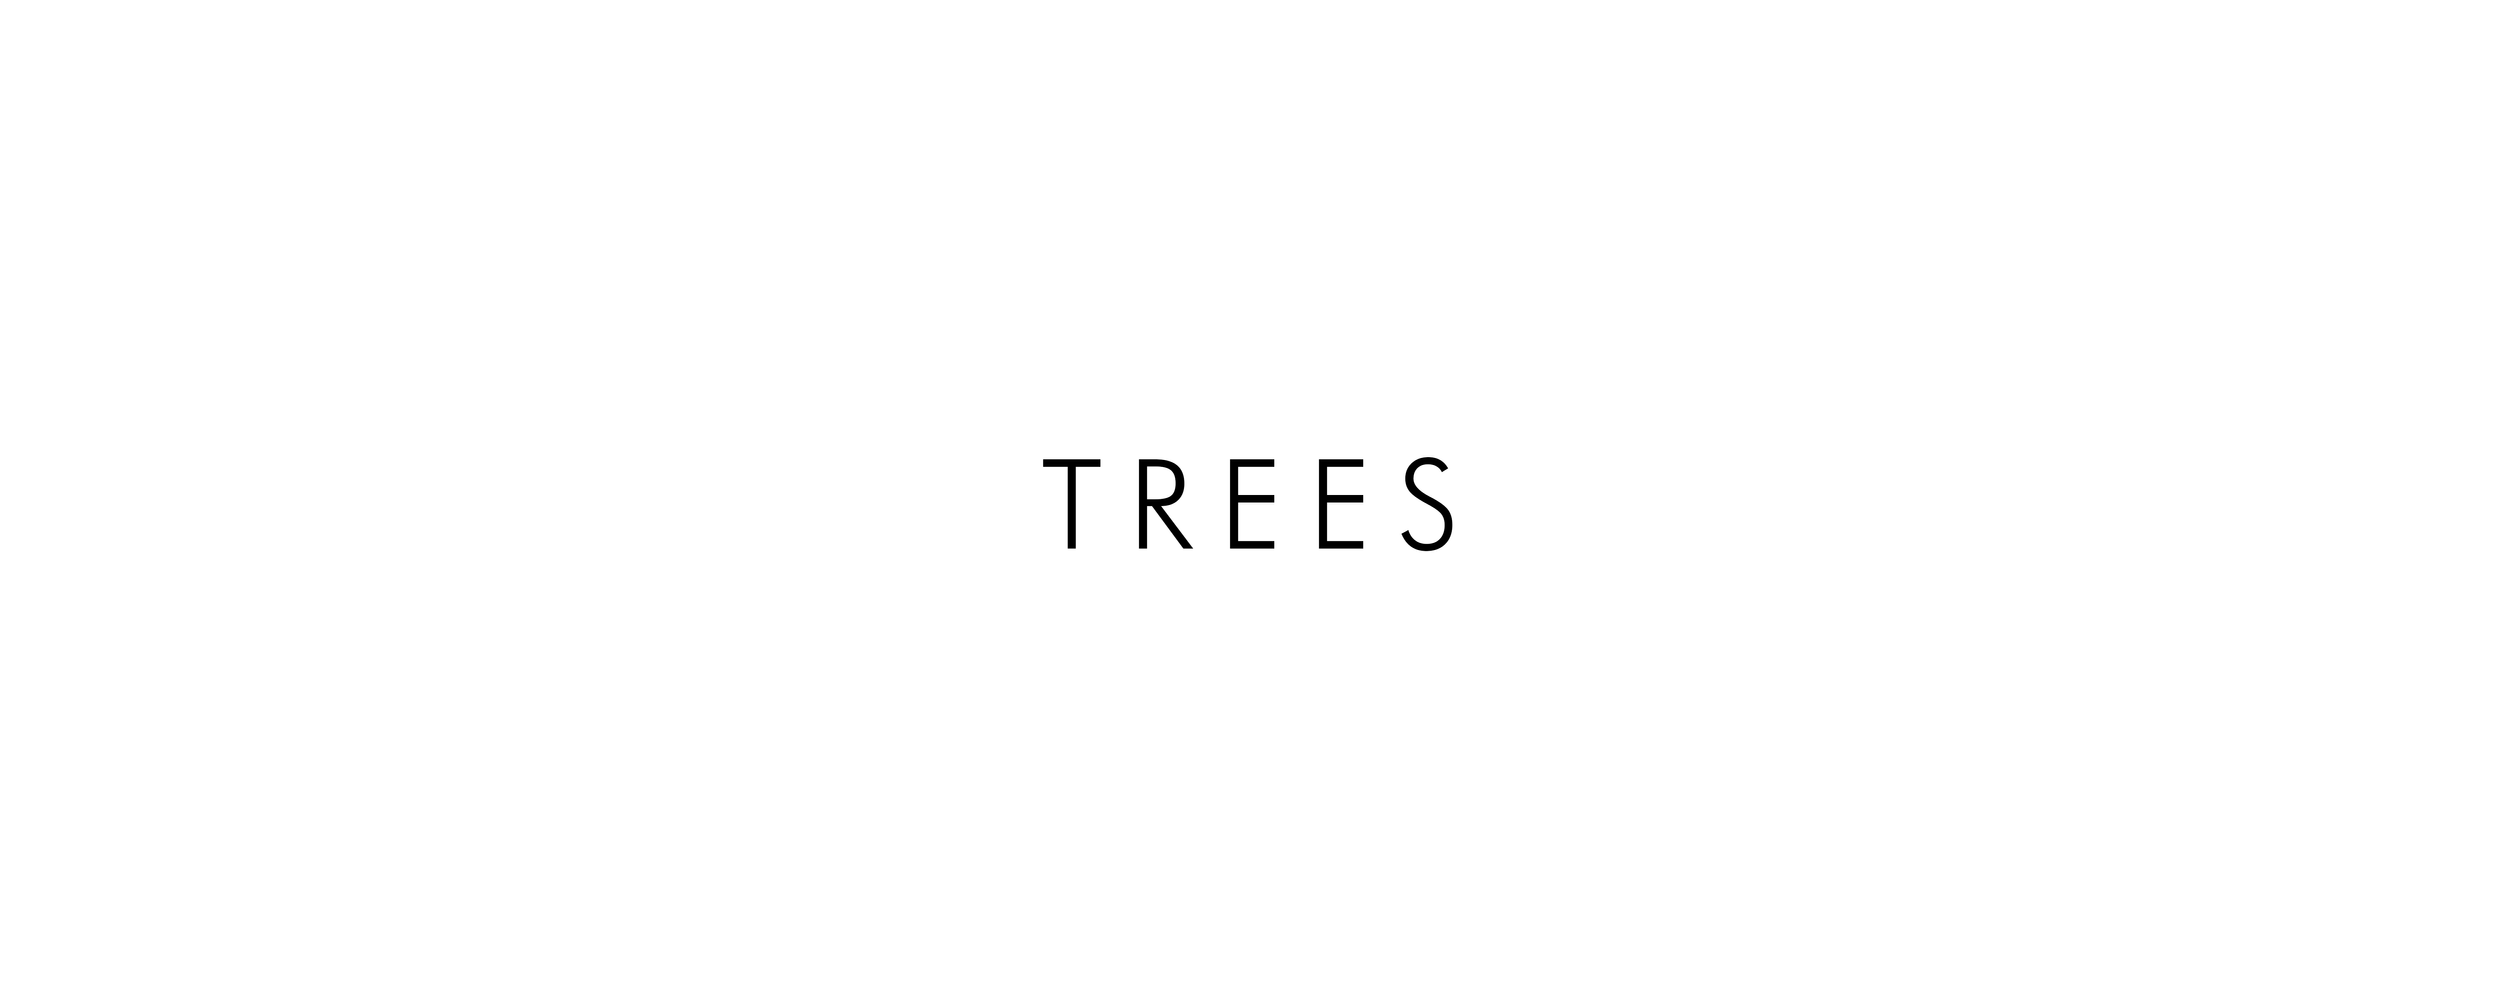 Menu_trees_light.png